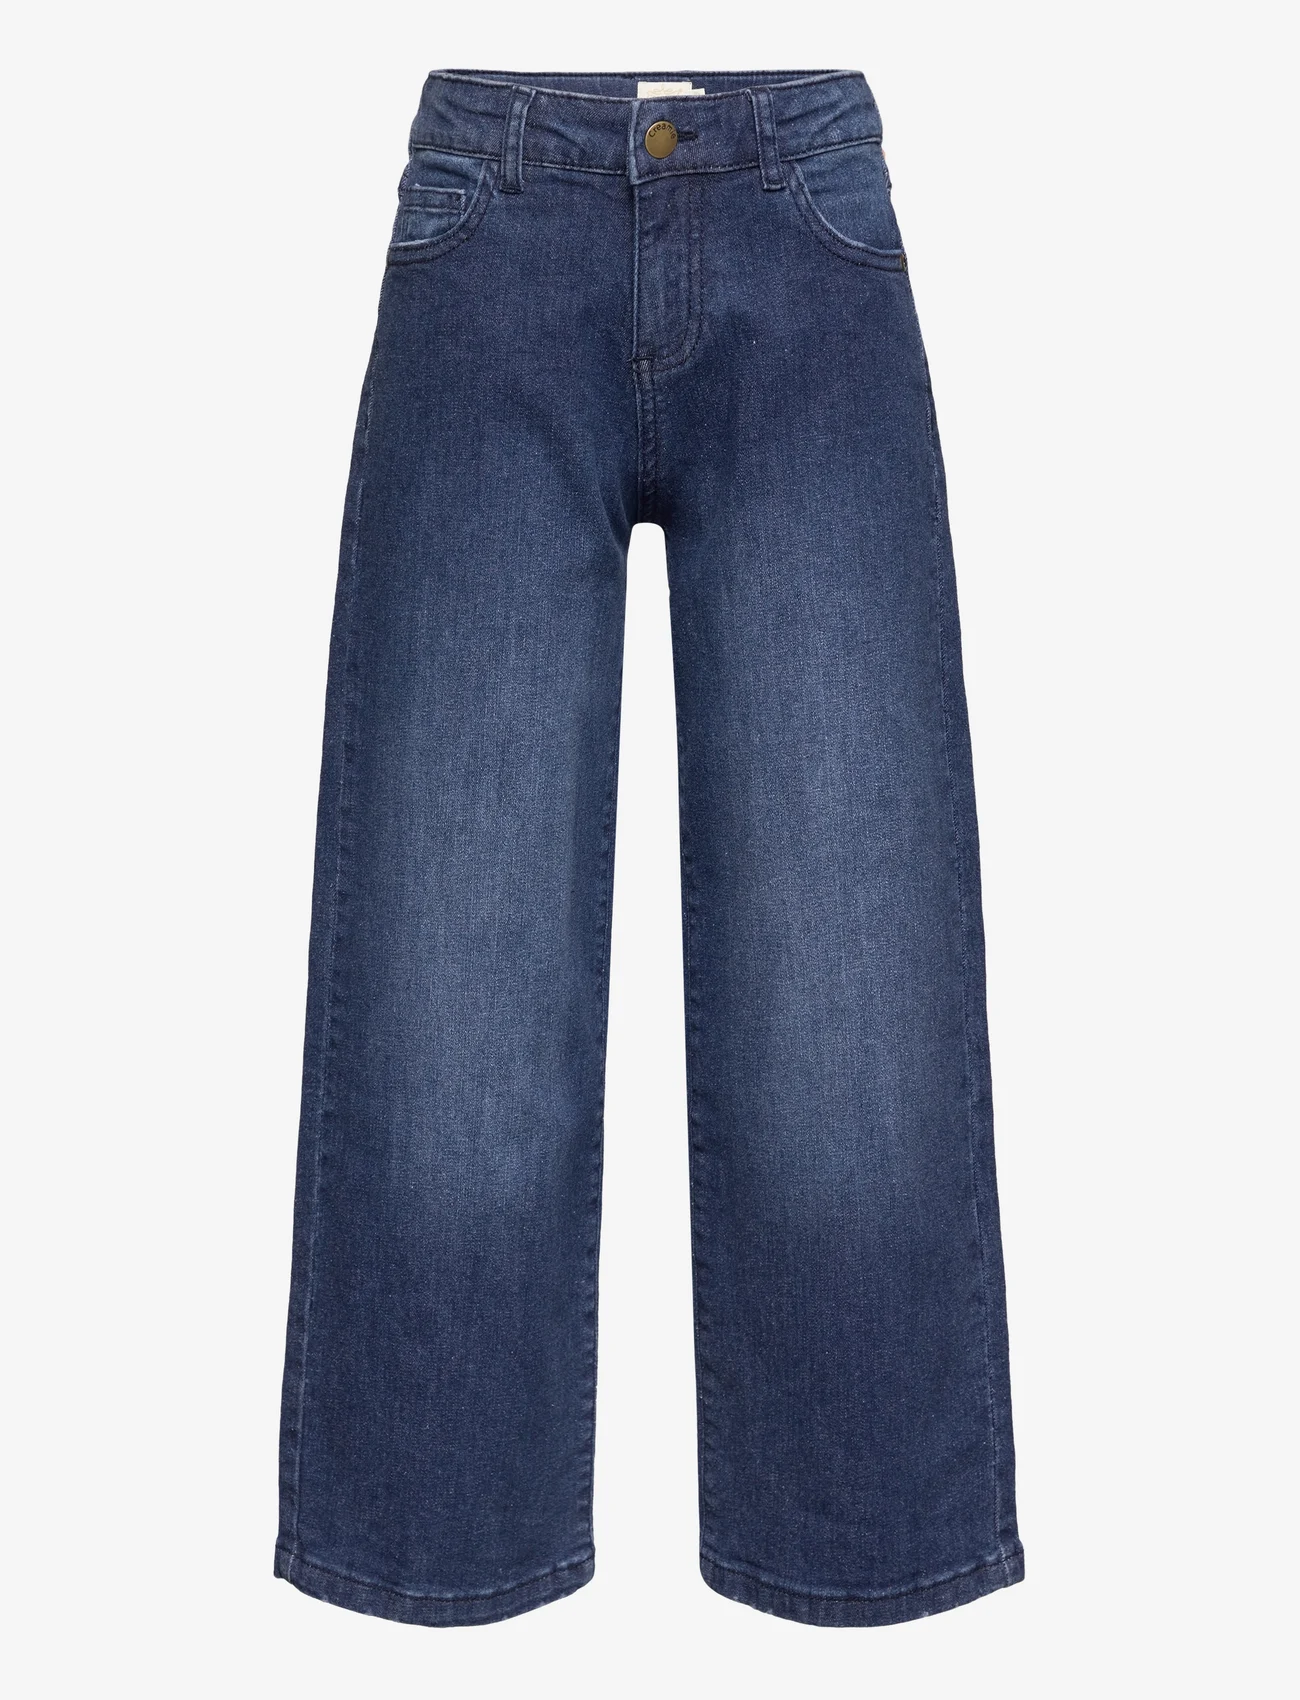 Creamie - Jeans Wide - brede jeans - blue denim - 0